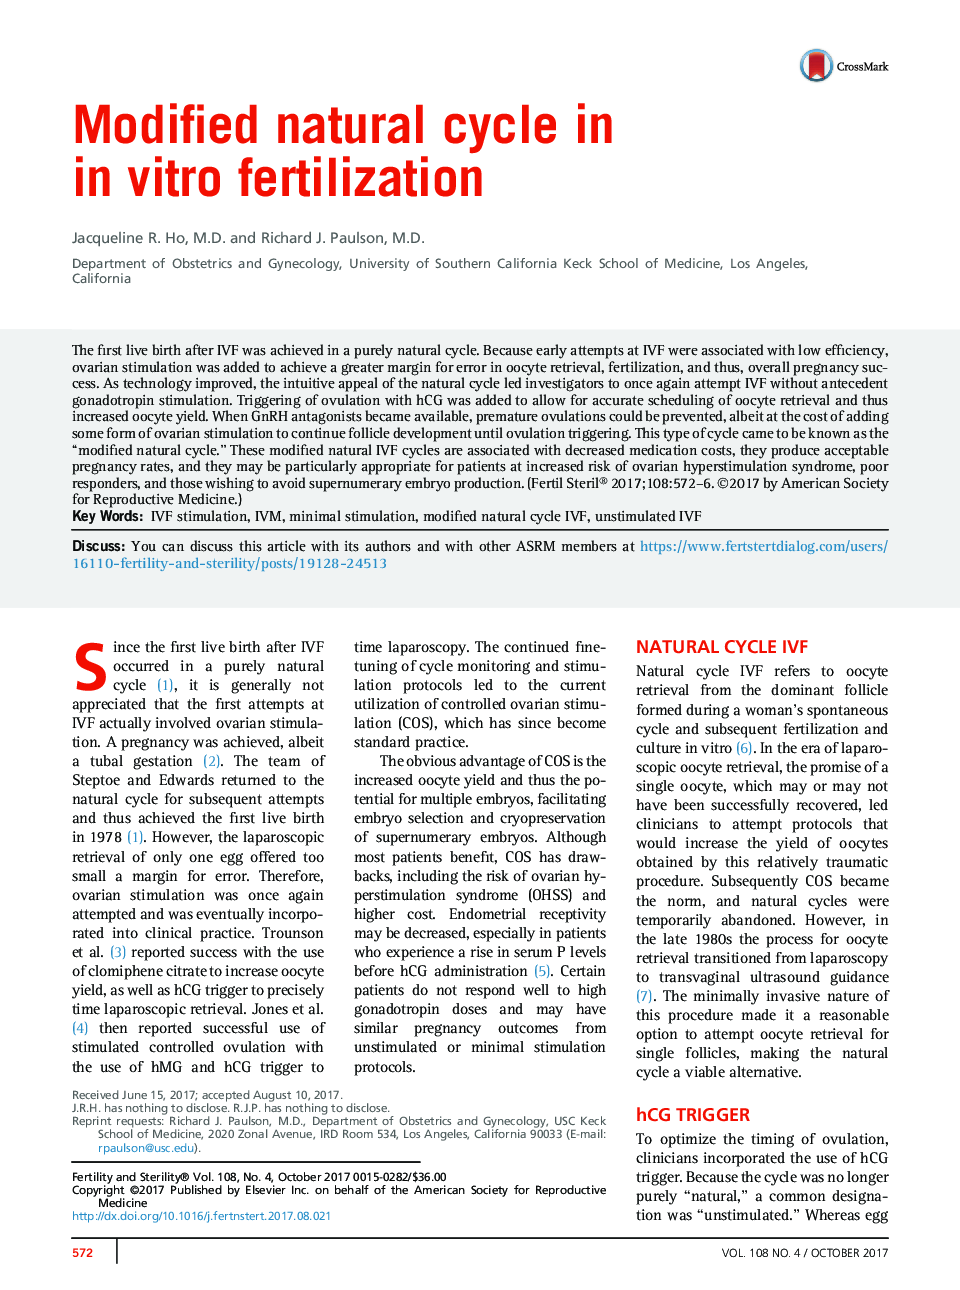 Modified natural cycle in inÂ vitro fertilization